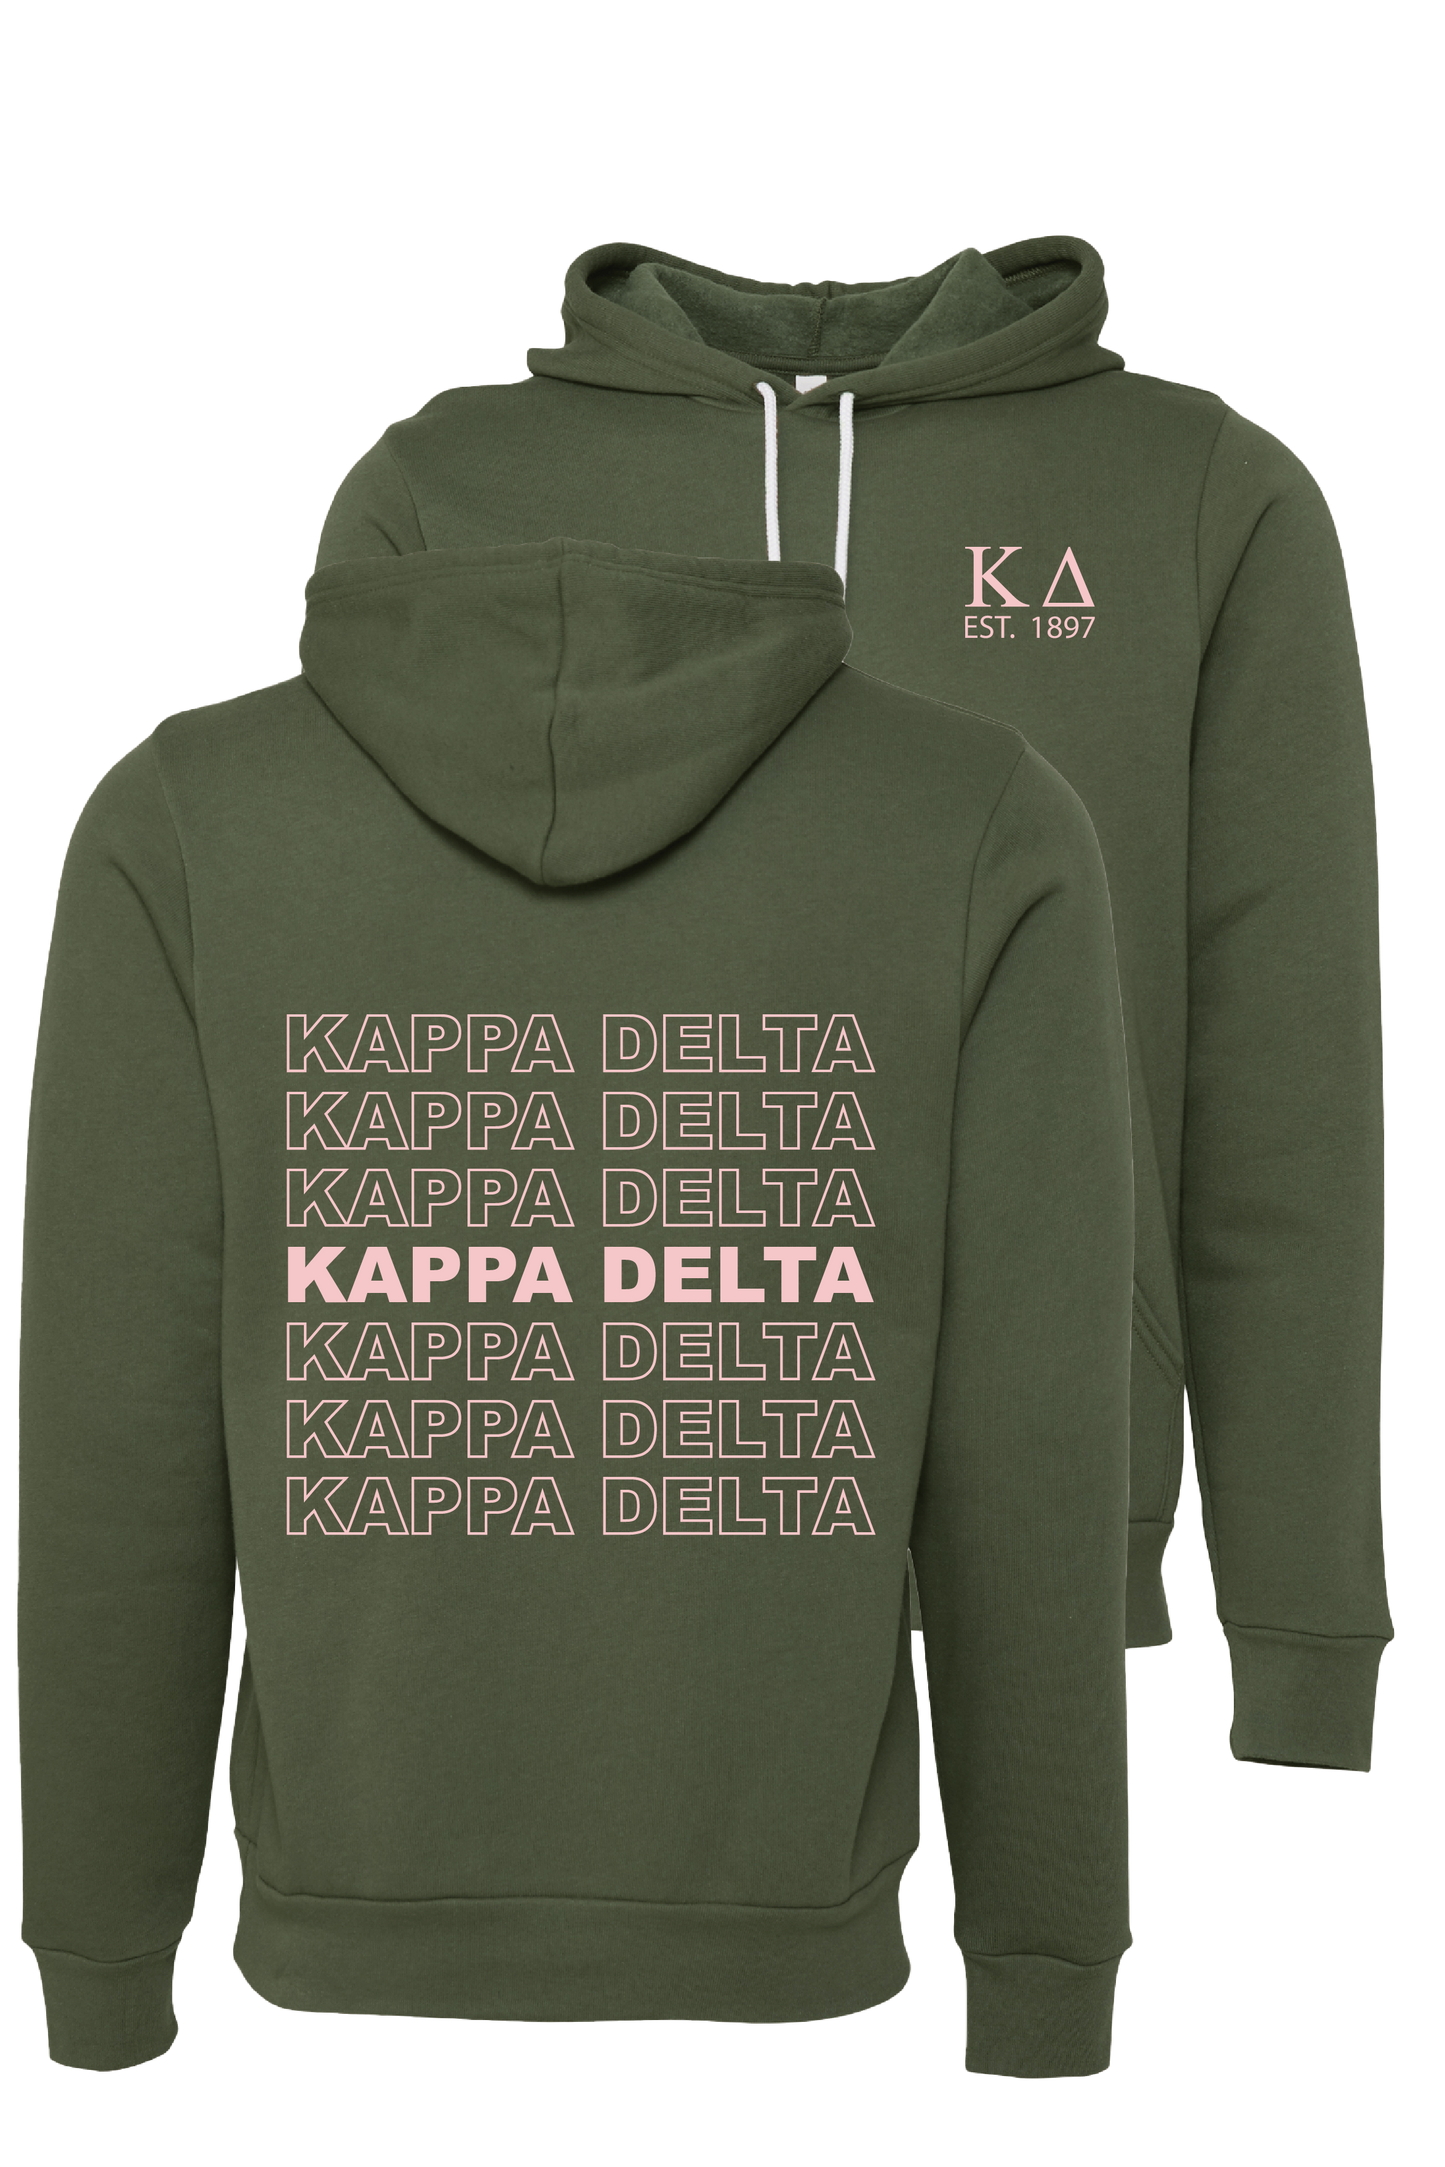 Kappa Delta Repeating Name Hooded Sweatshirts